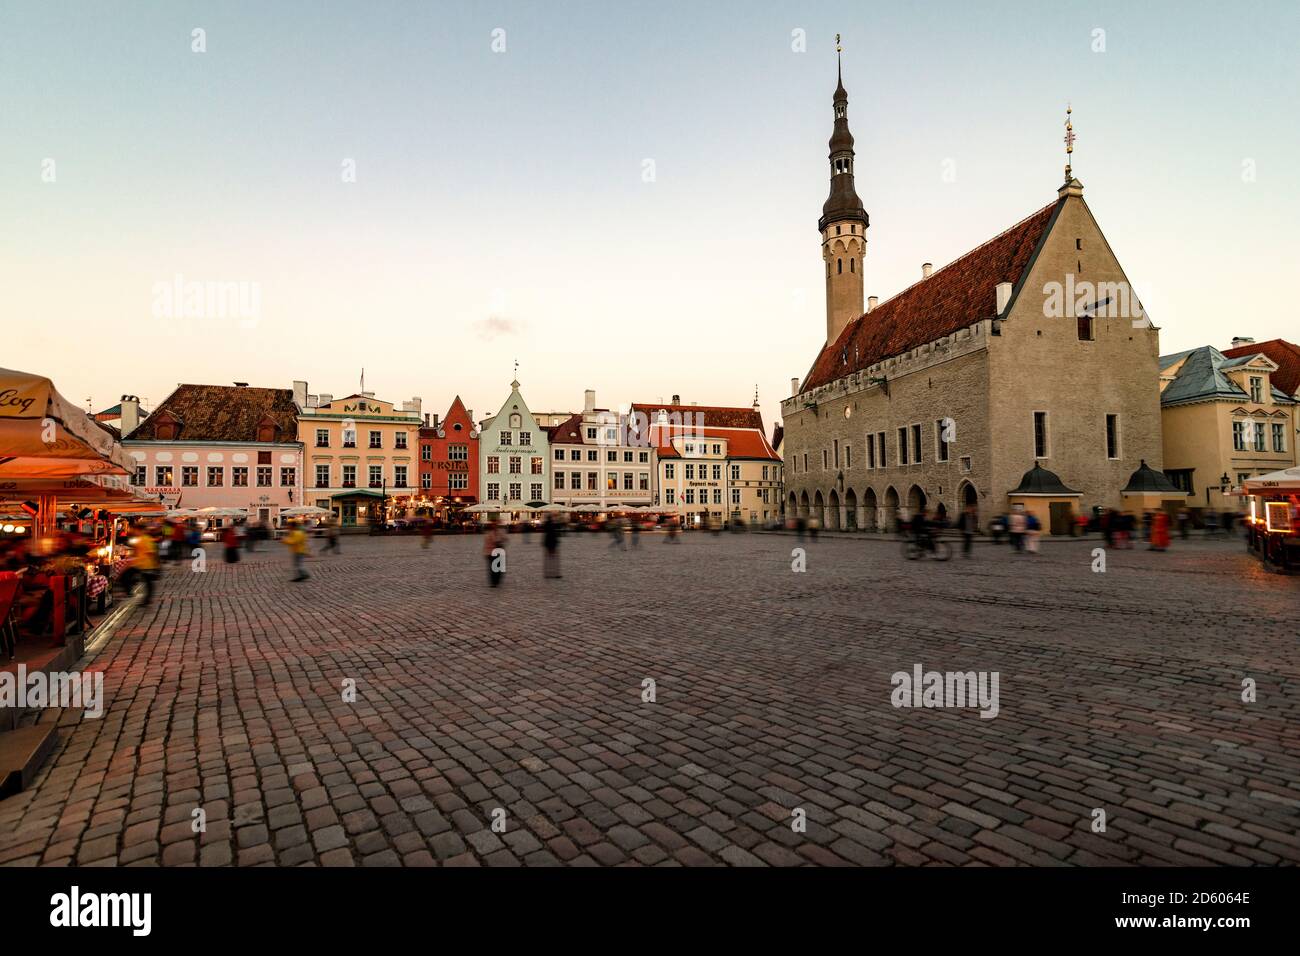 Estonia, Tallinn, Market place with town hall Stock Photo